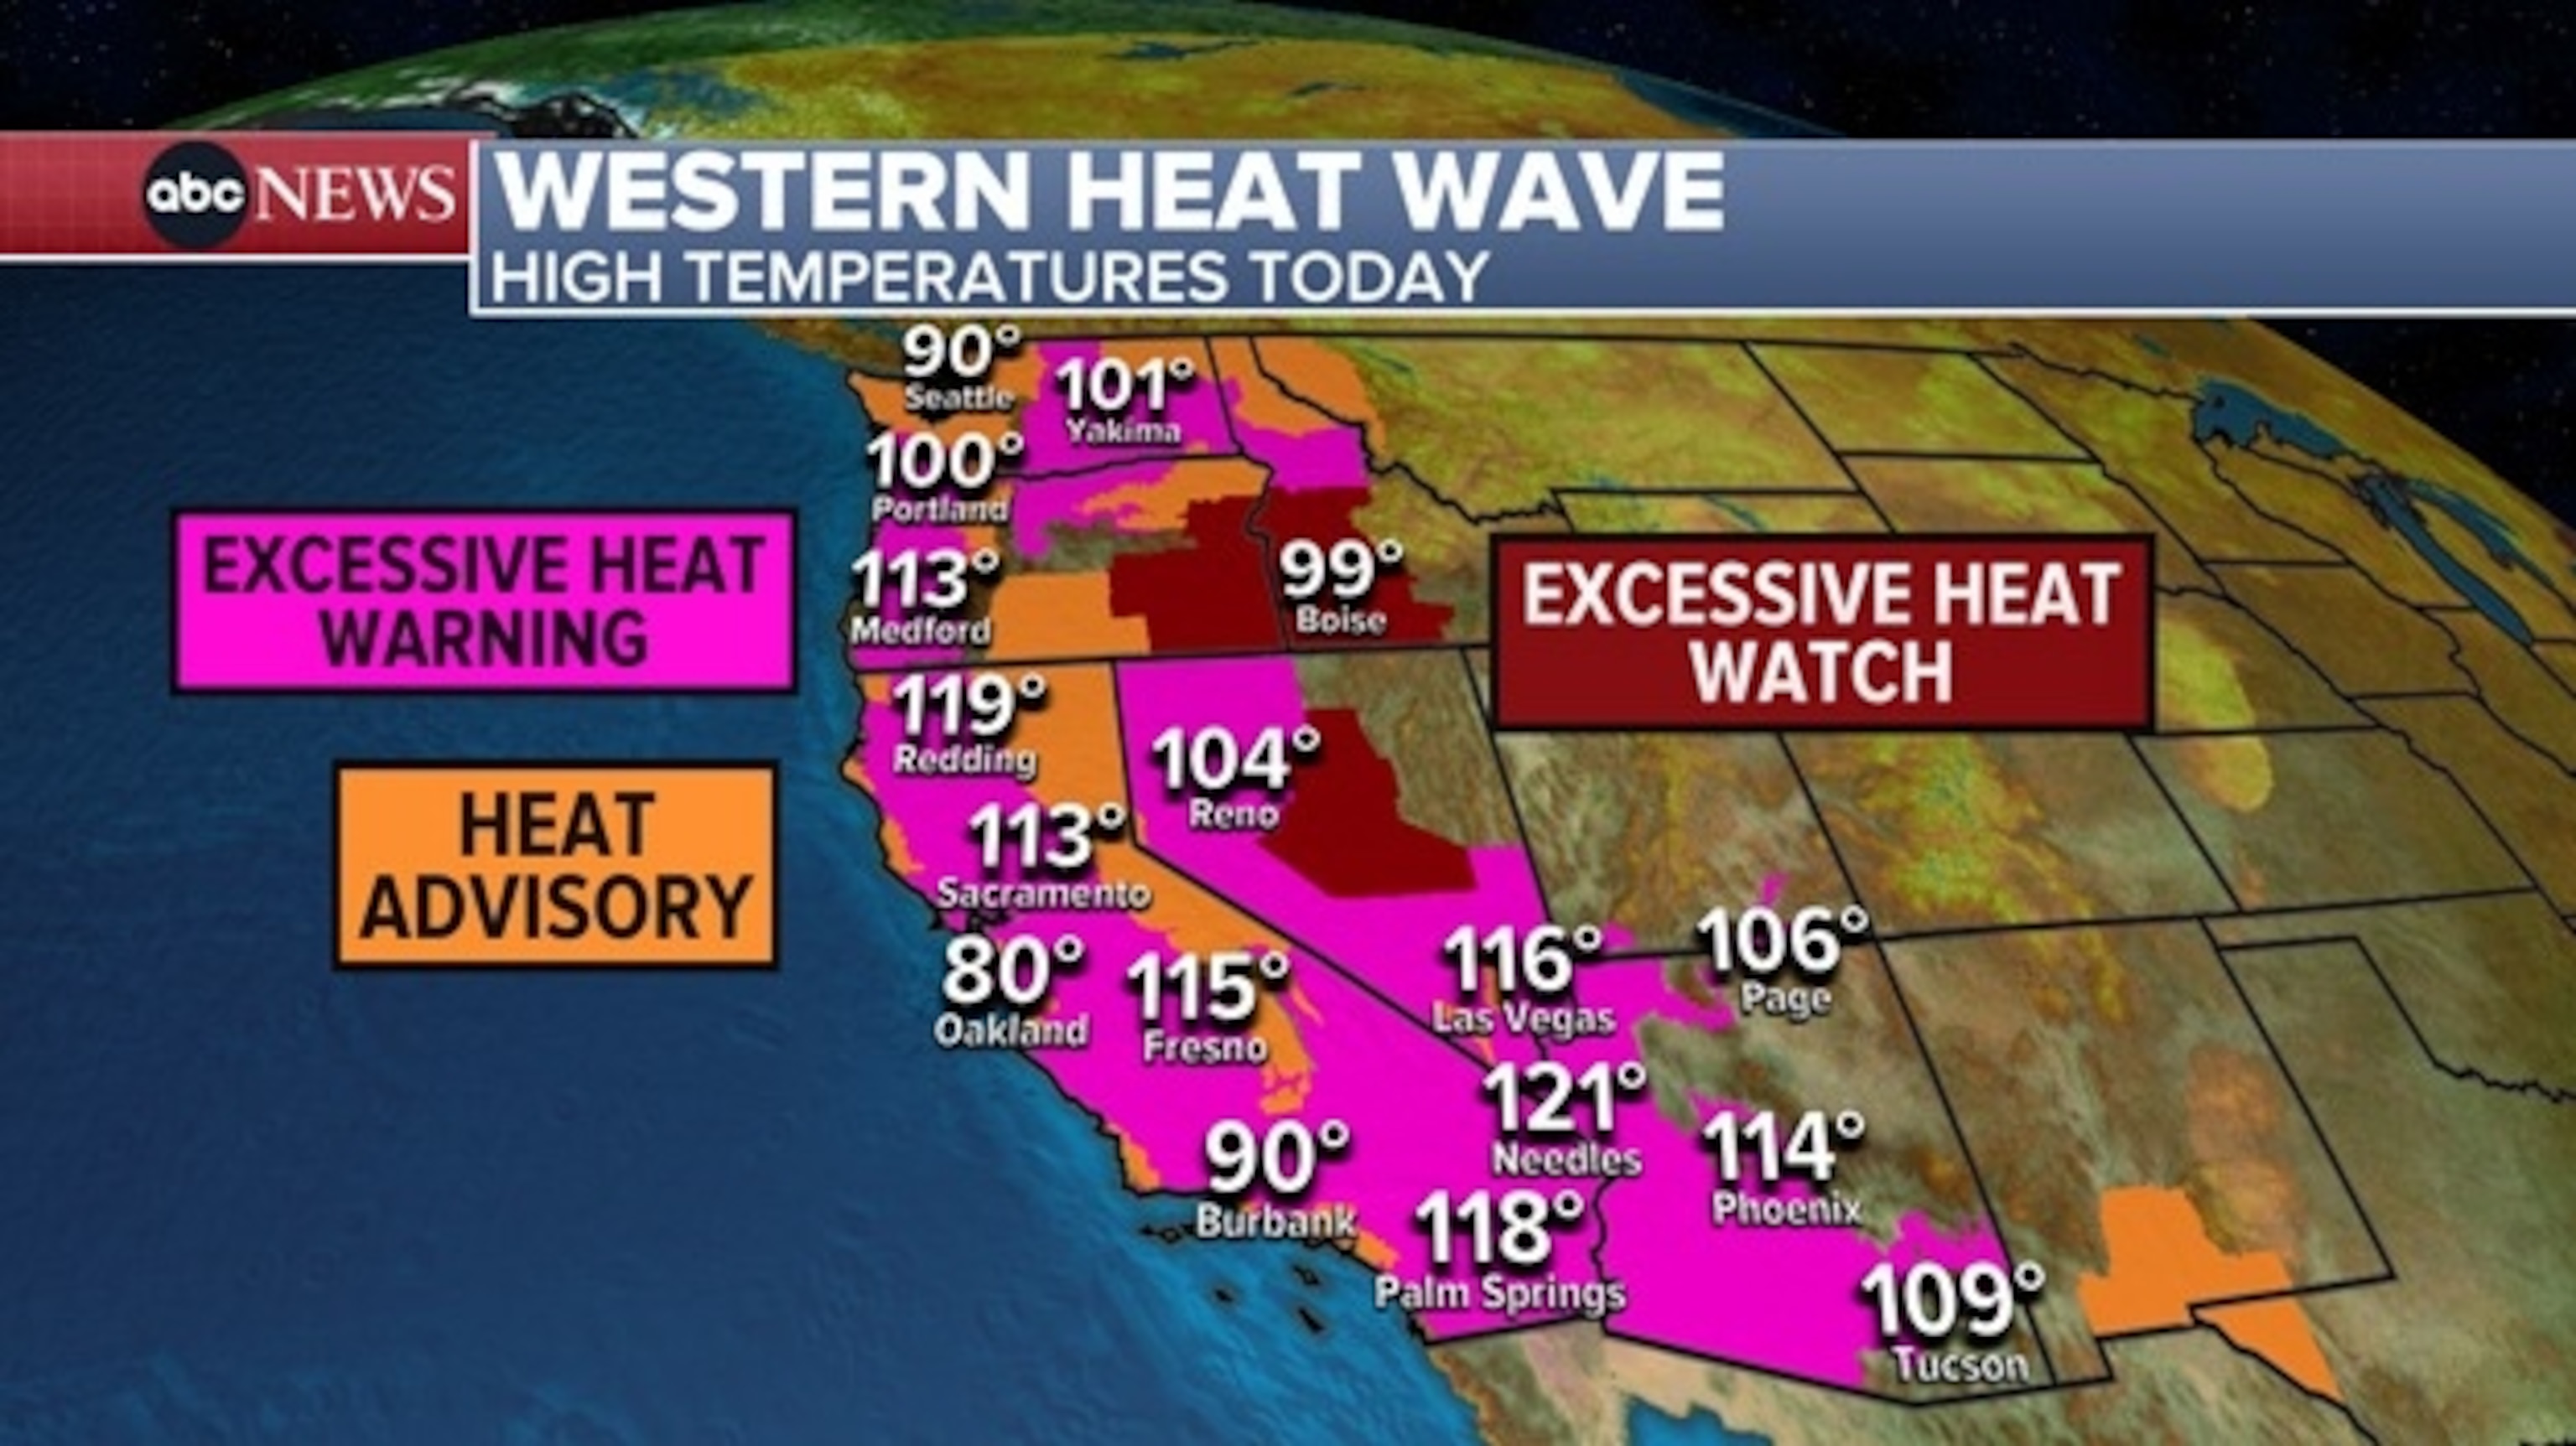 PHOTO: Western heat wave map